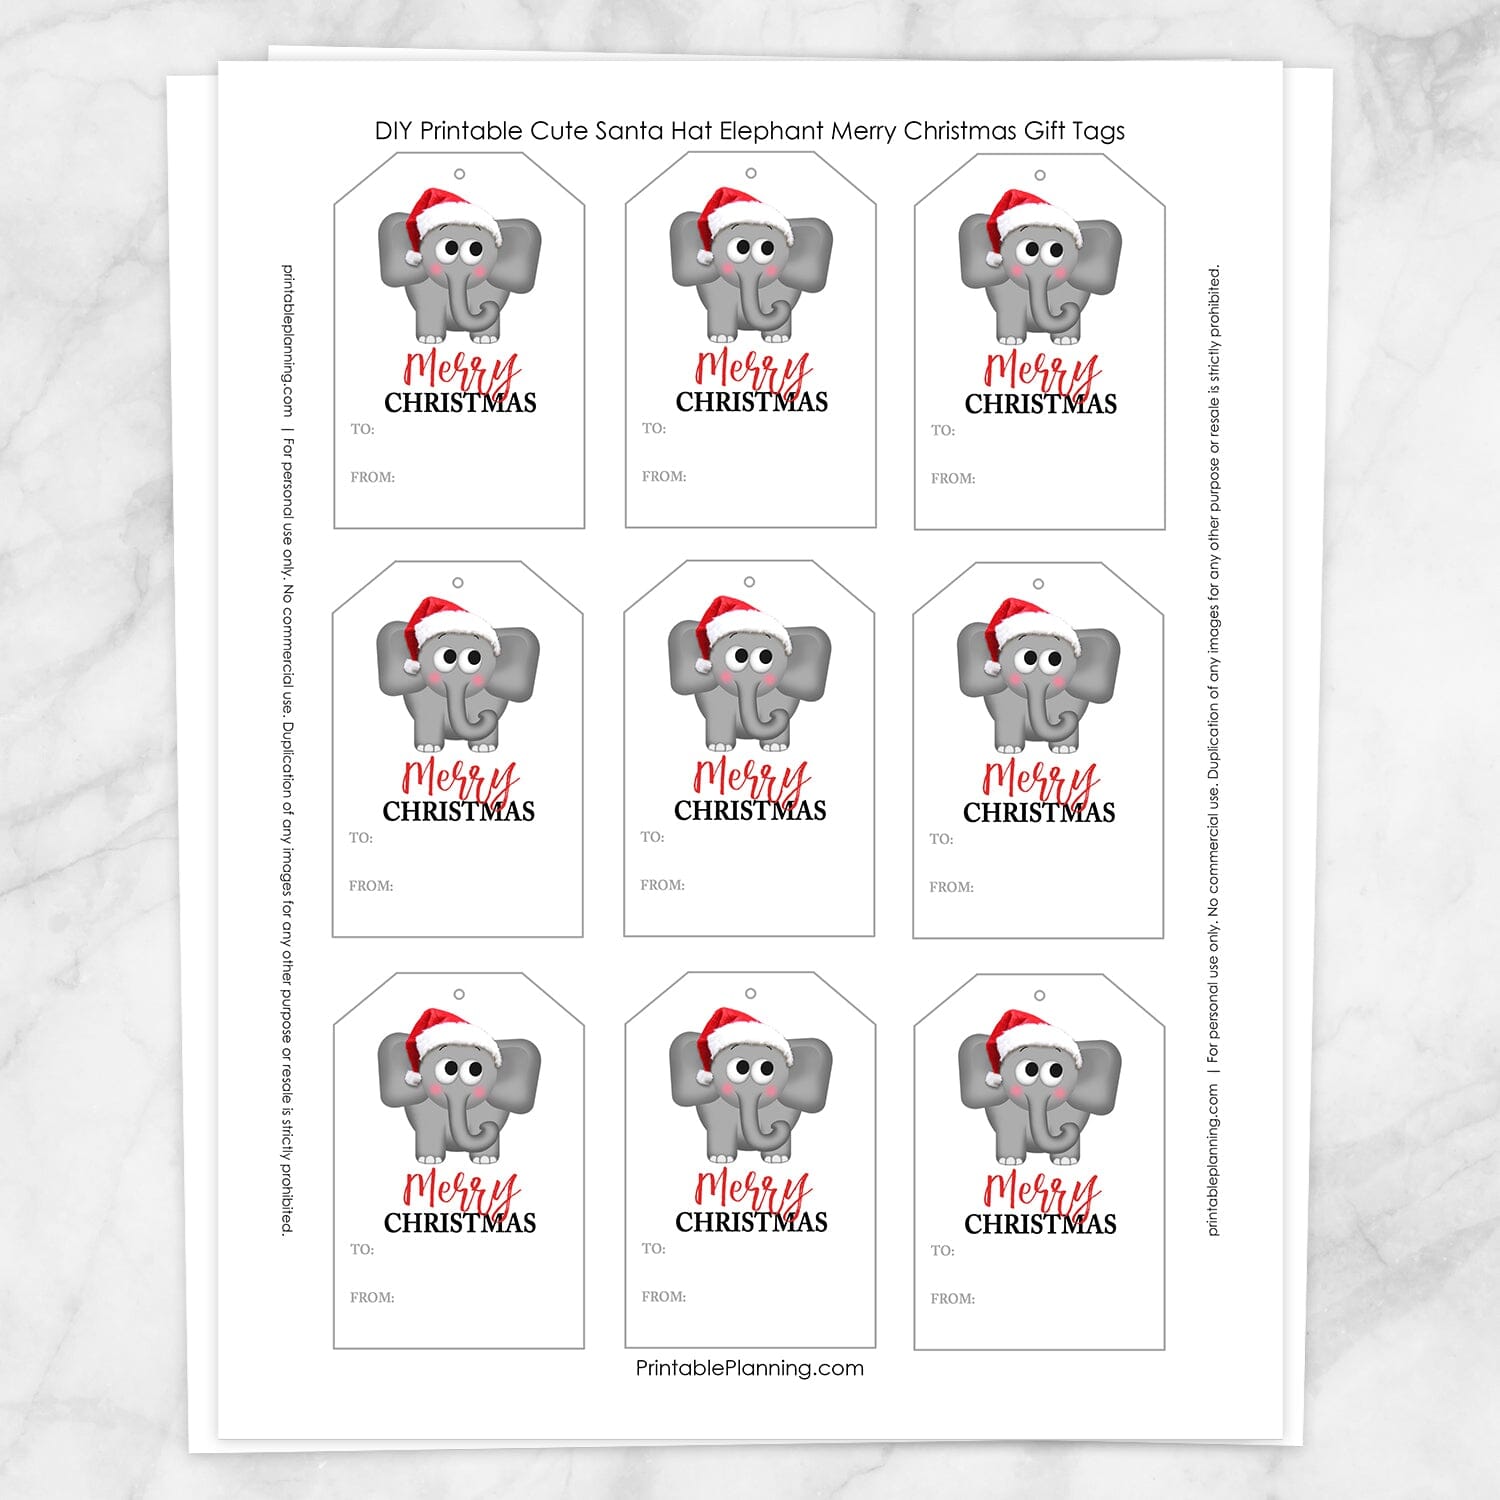 Printable Cute Santa Hat Elephant Merry Christmas Gift Tags at Printable Planning. Sheet of 9 gift tags.